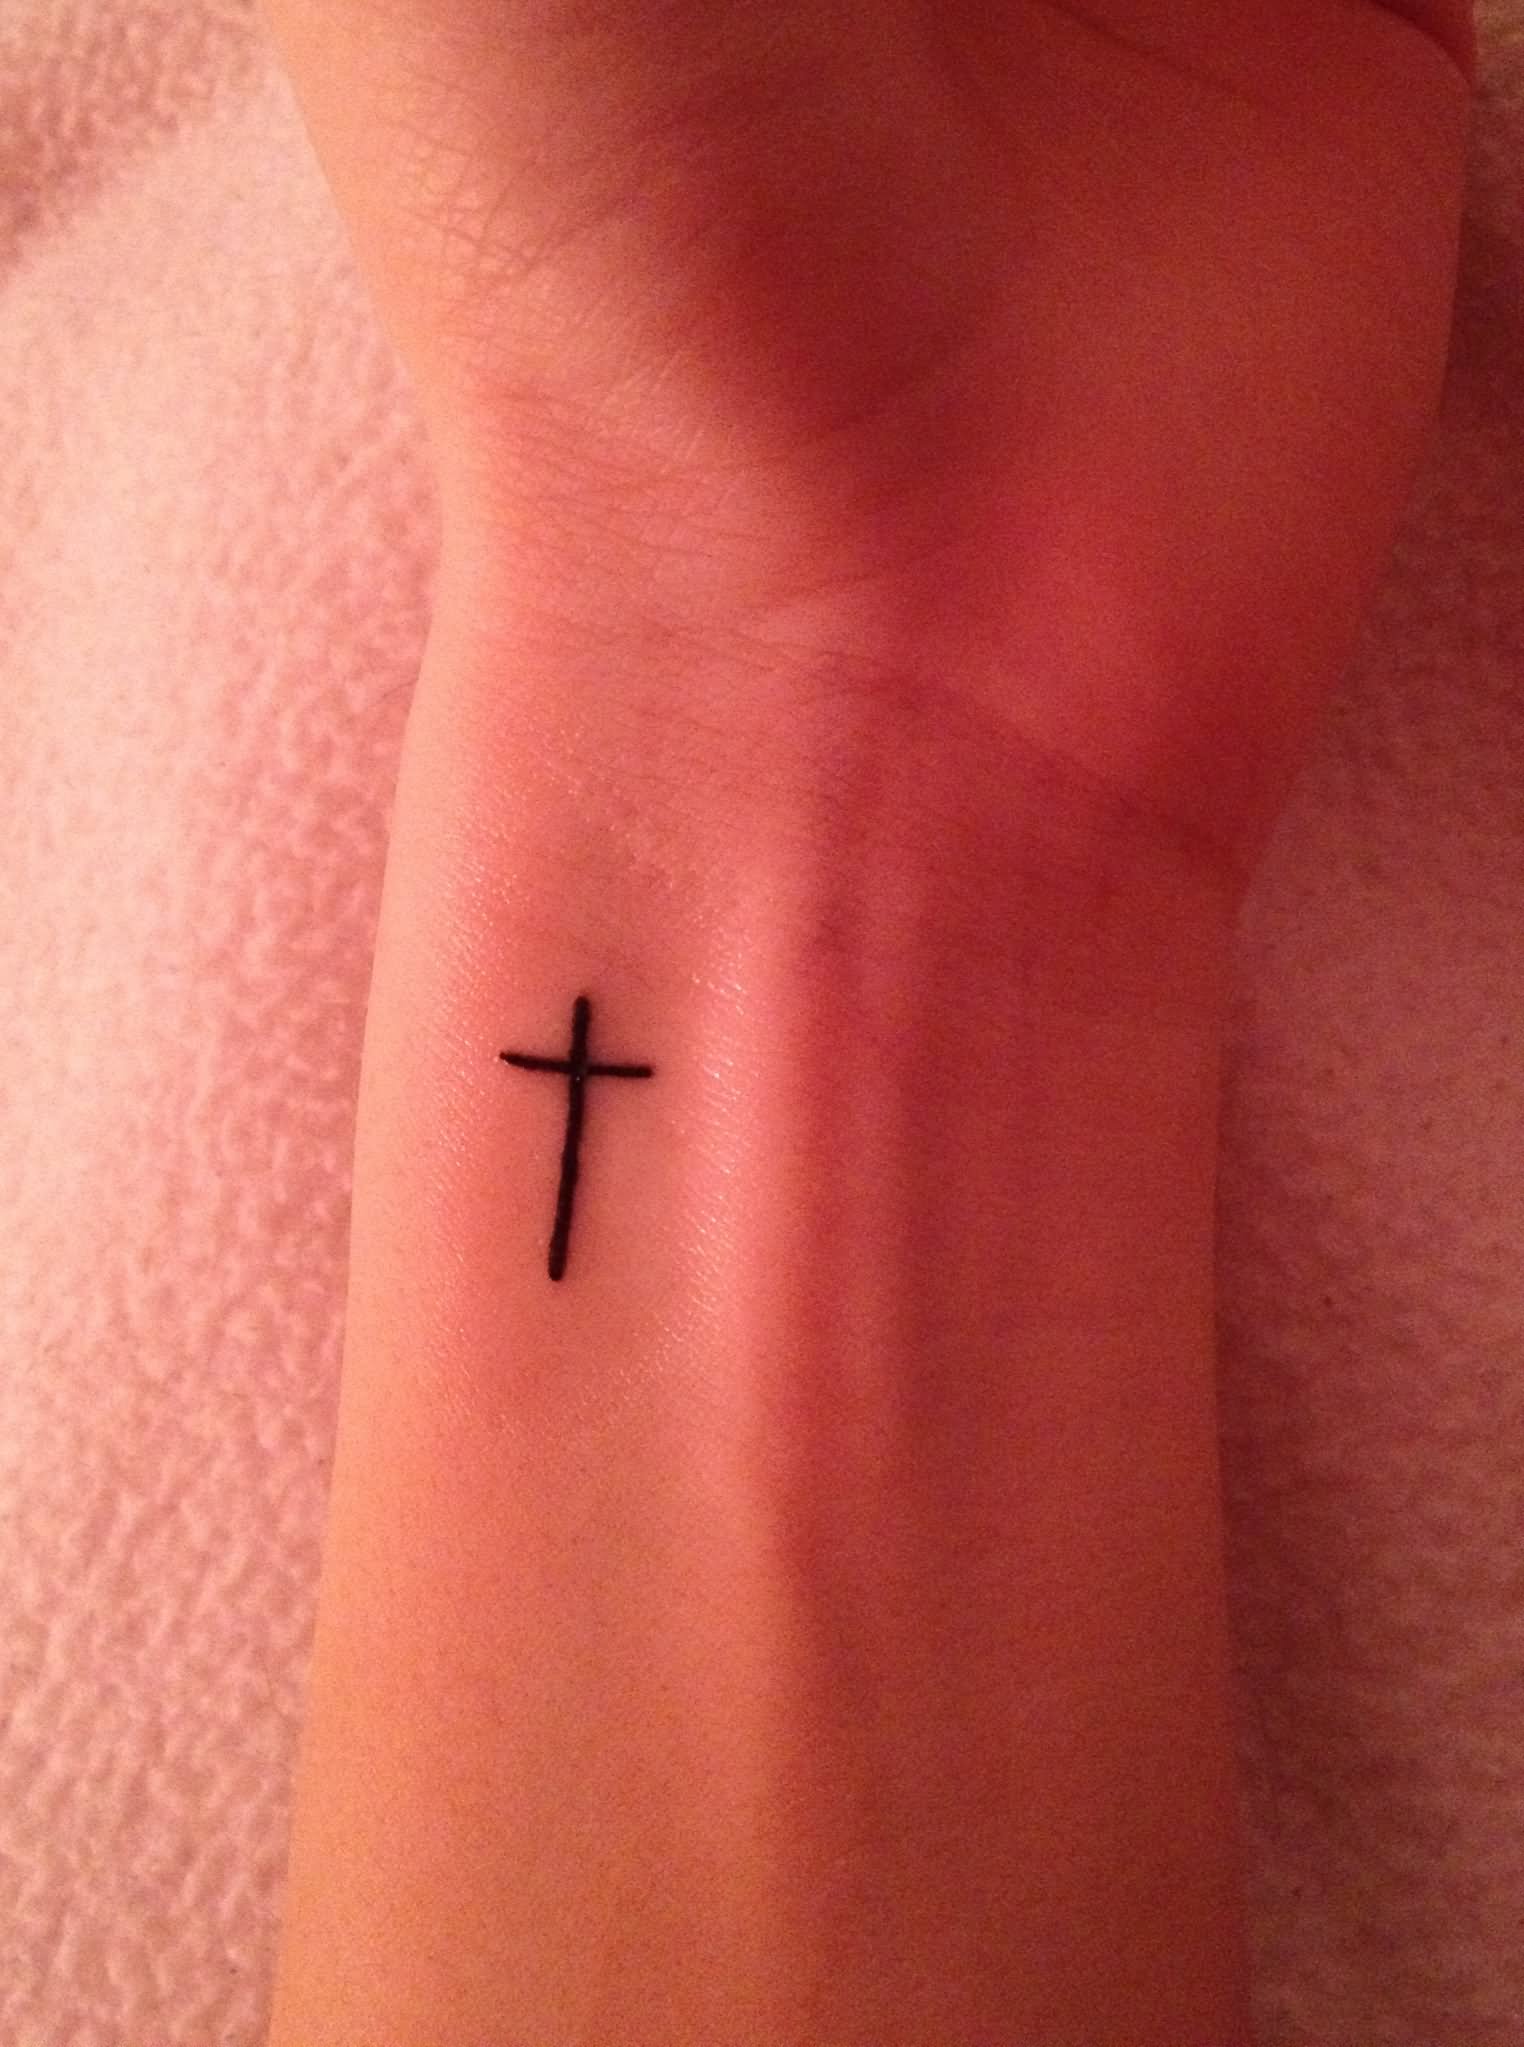 Simple Cross Wrist Tattoos For Girls